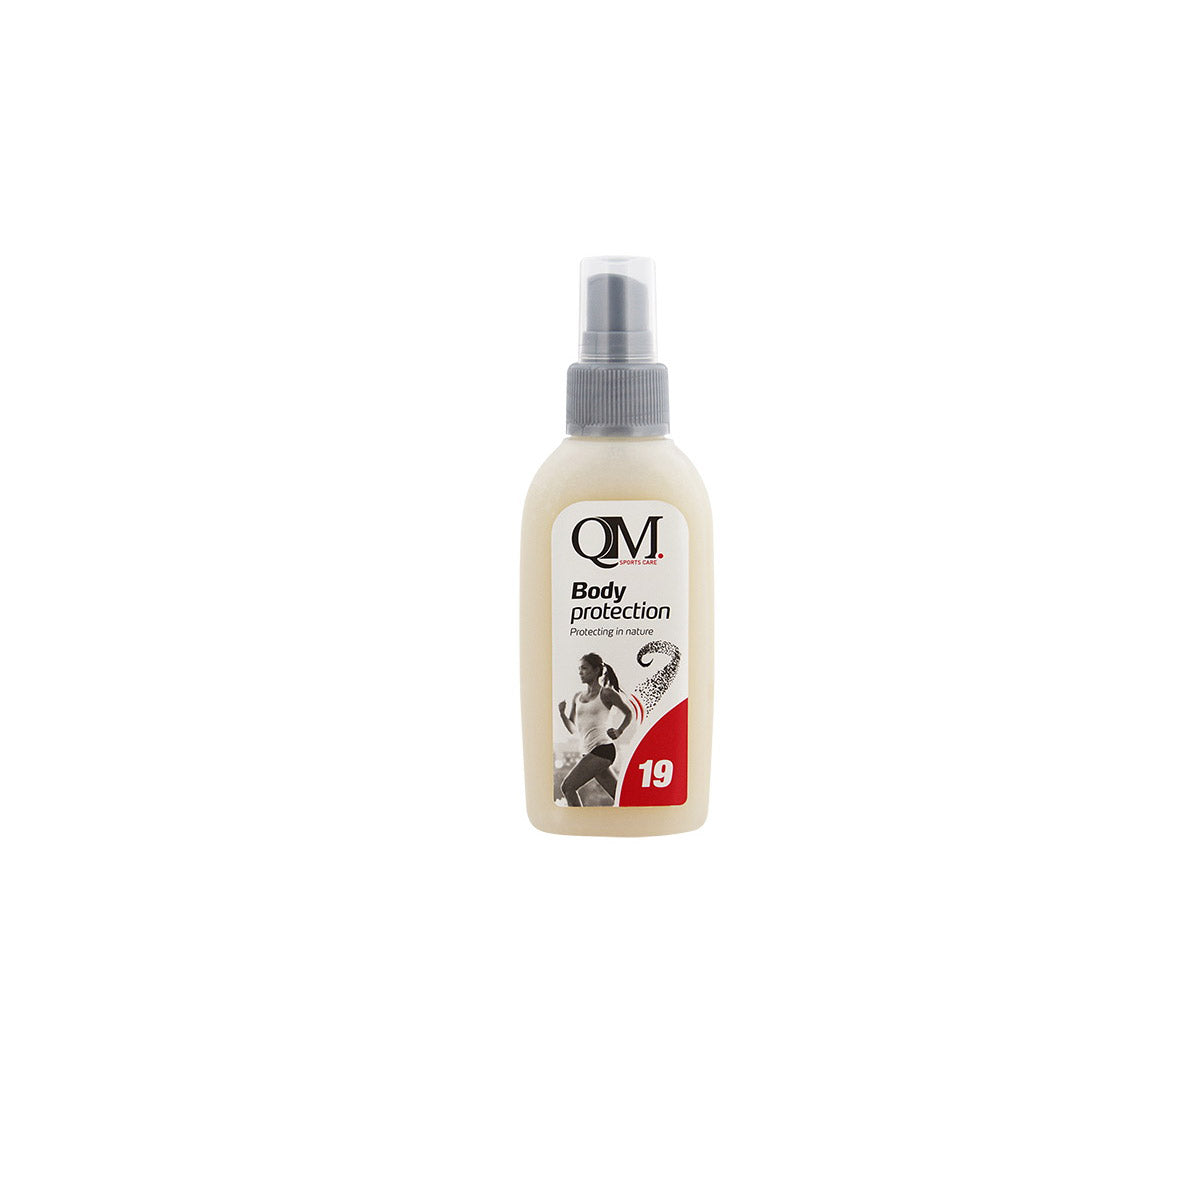 Qm QM Sportscare 19 spray Body Protection 100ml